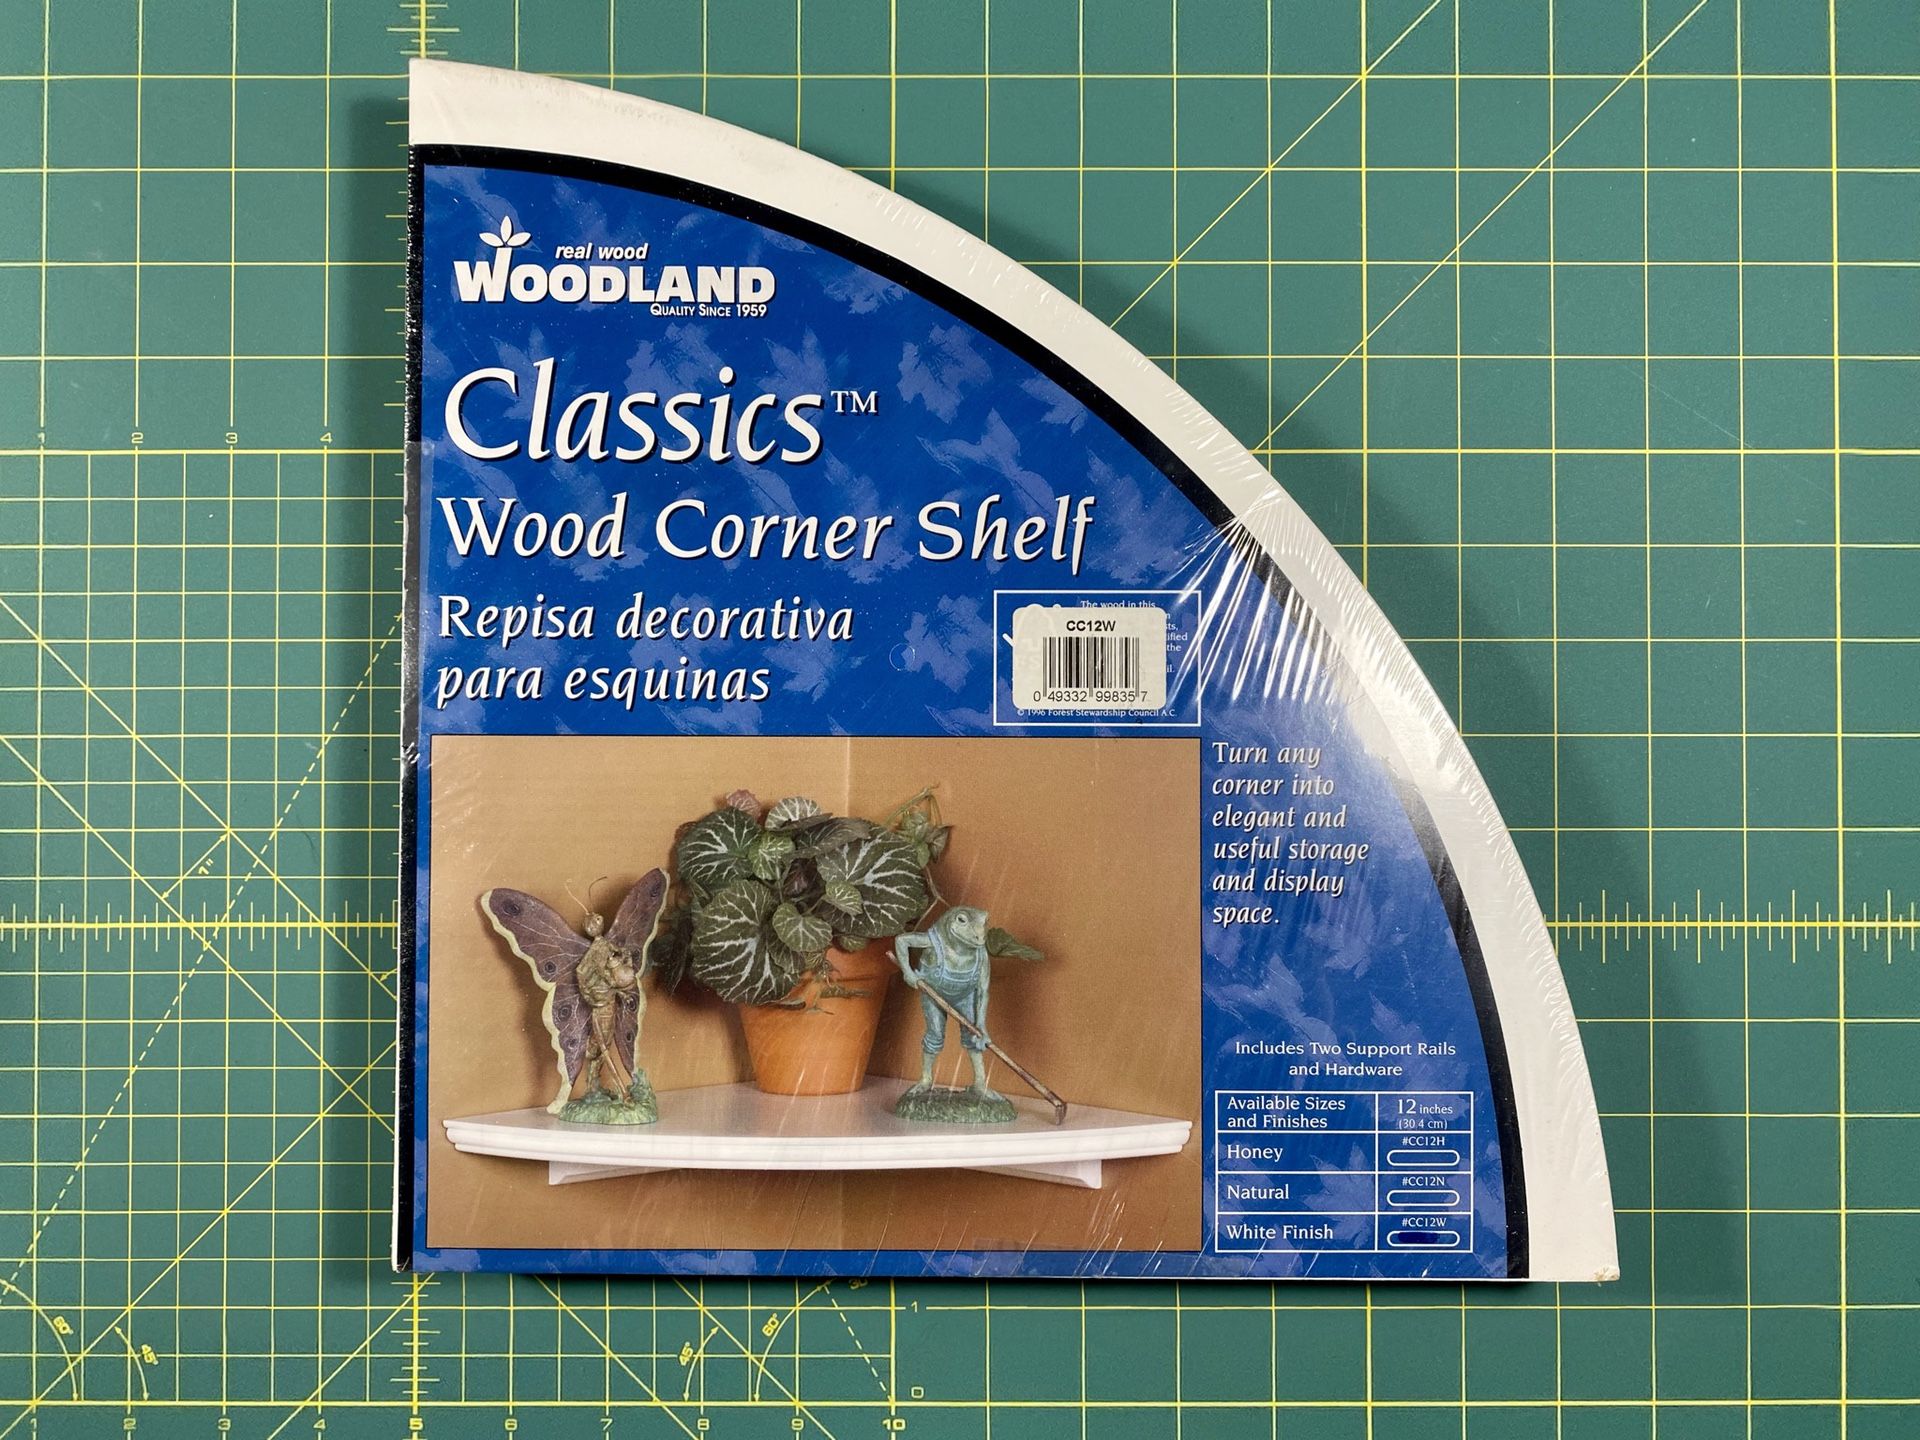 Wood corners shelf 12in white brand new X2 (two include)